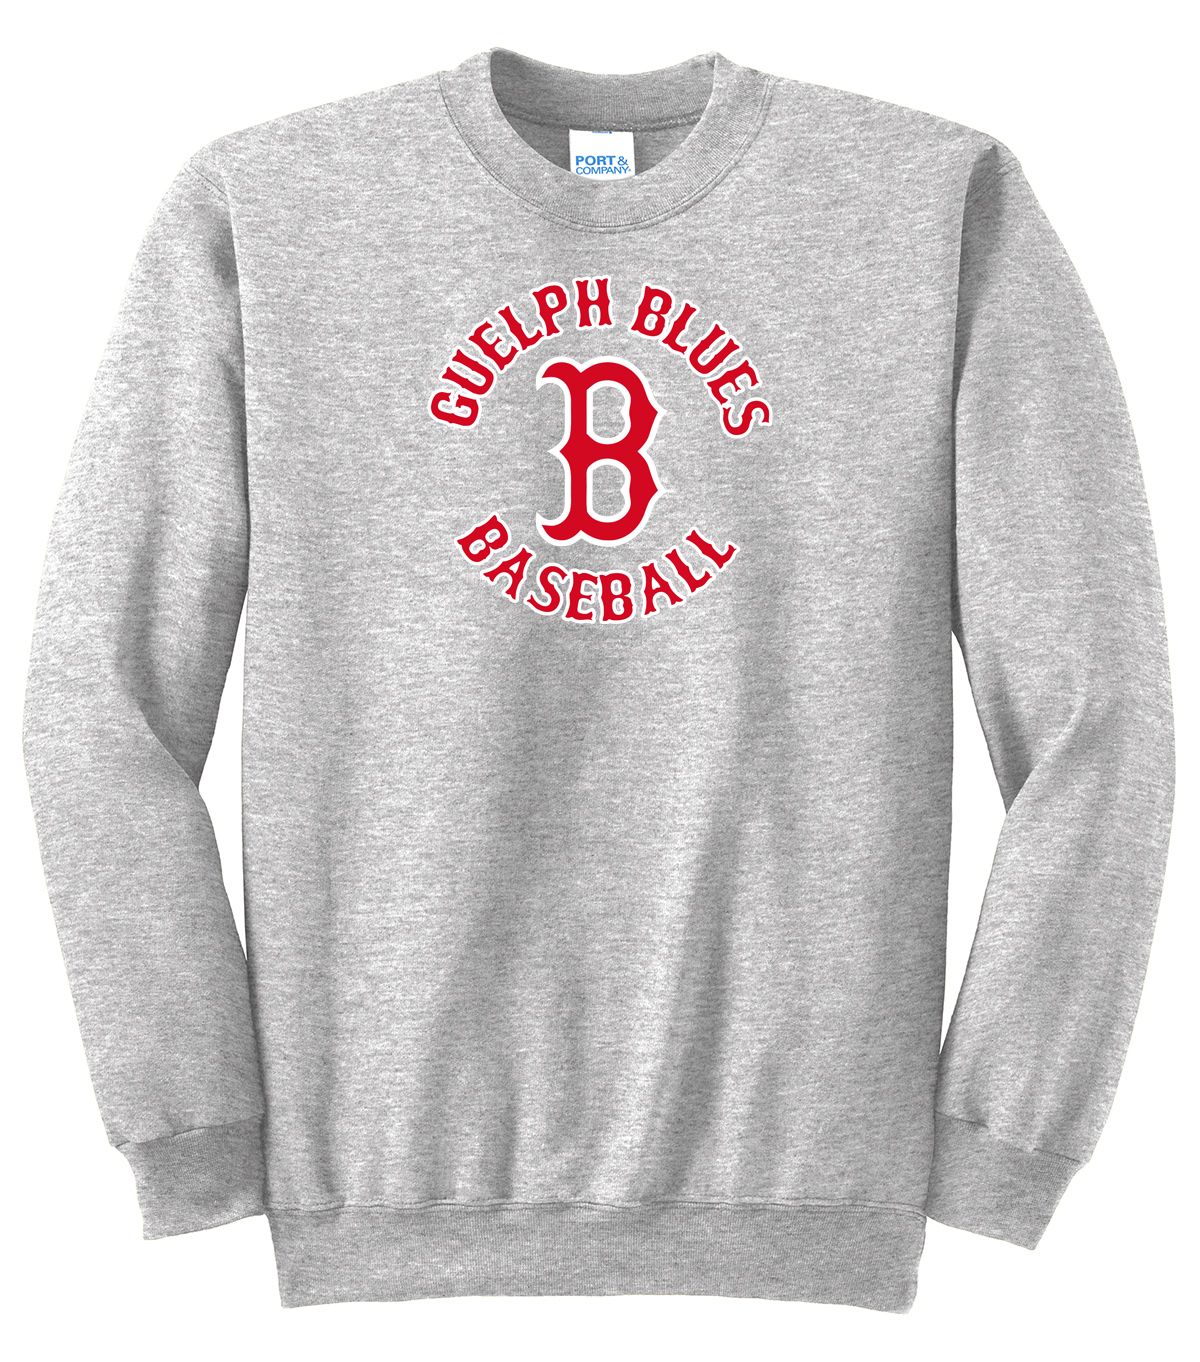 Guelph Blues Baseball Crew Neck Sweater